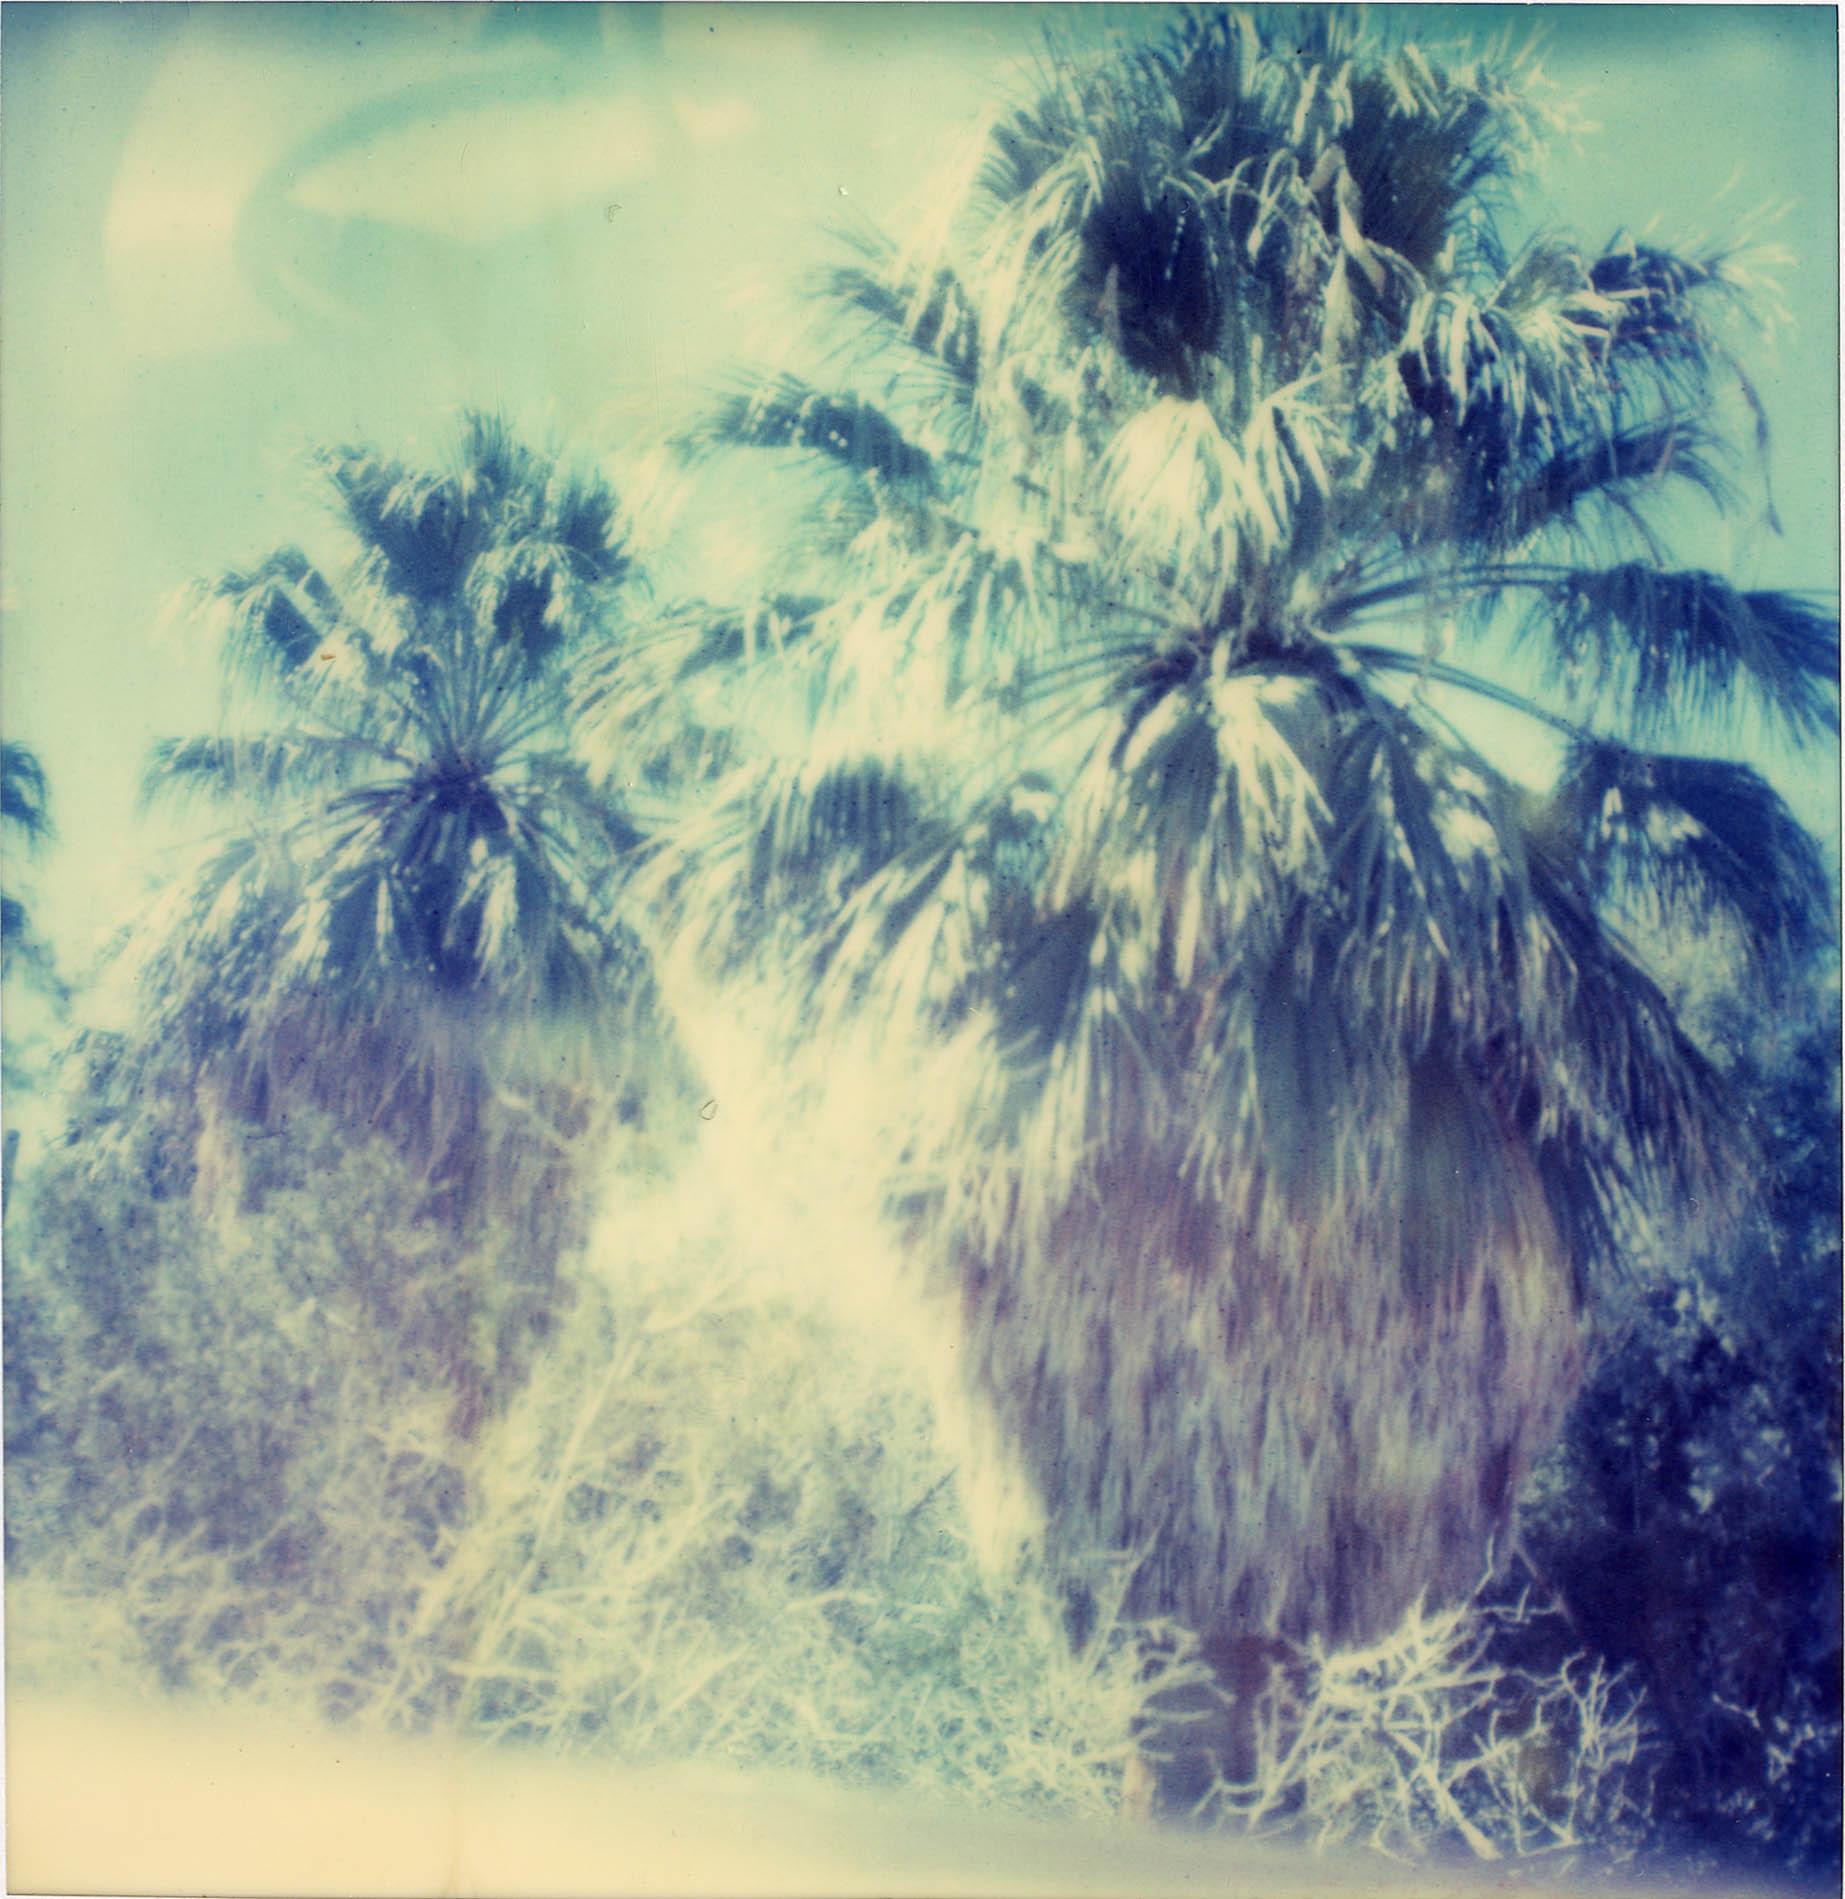 Stefanie Schneider Landscape Photograph - Blue Sky Palm Trees (Sidewinder) -not mounted- 21st Century, Polaroid, Landscape